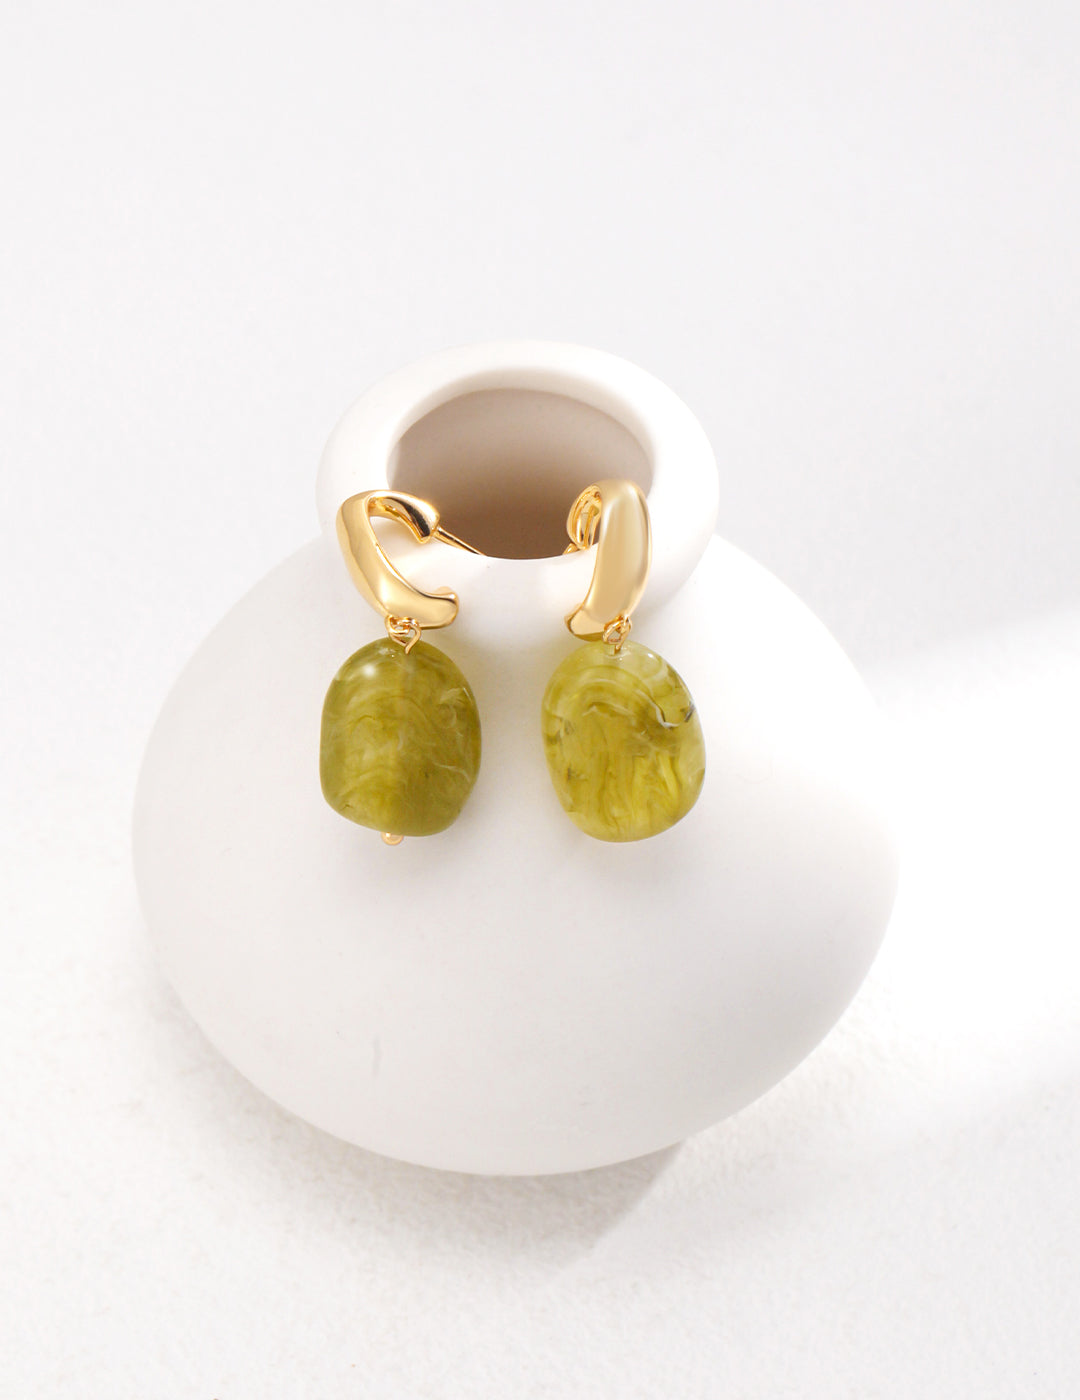 Green resin earrings